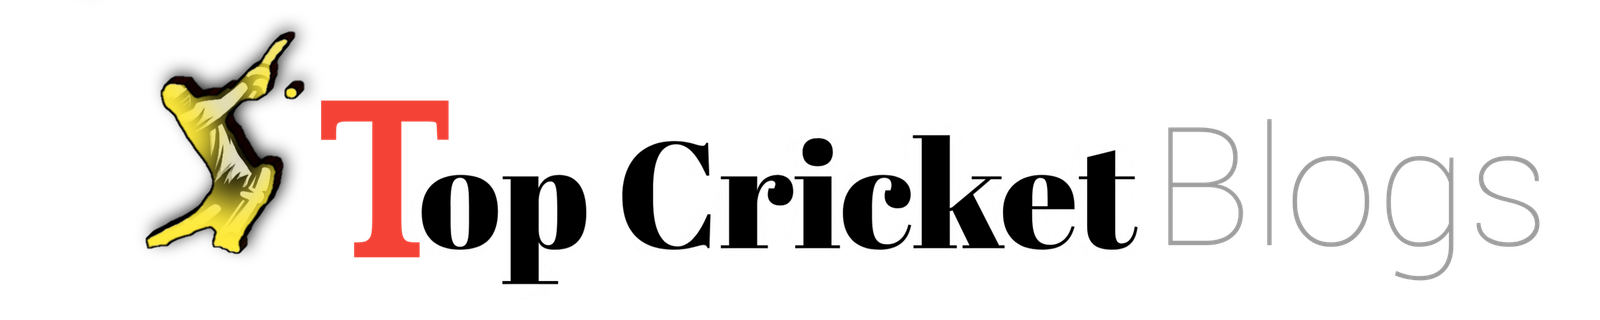 Top Cricket Blogs